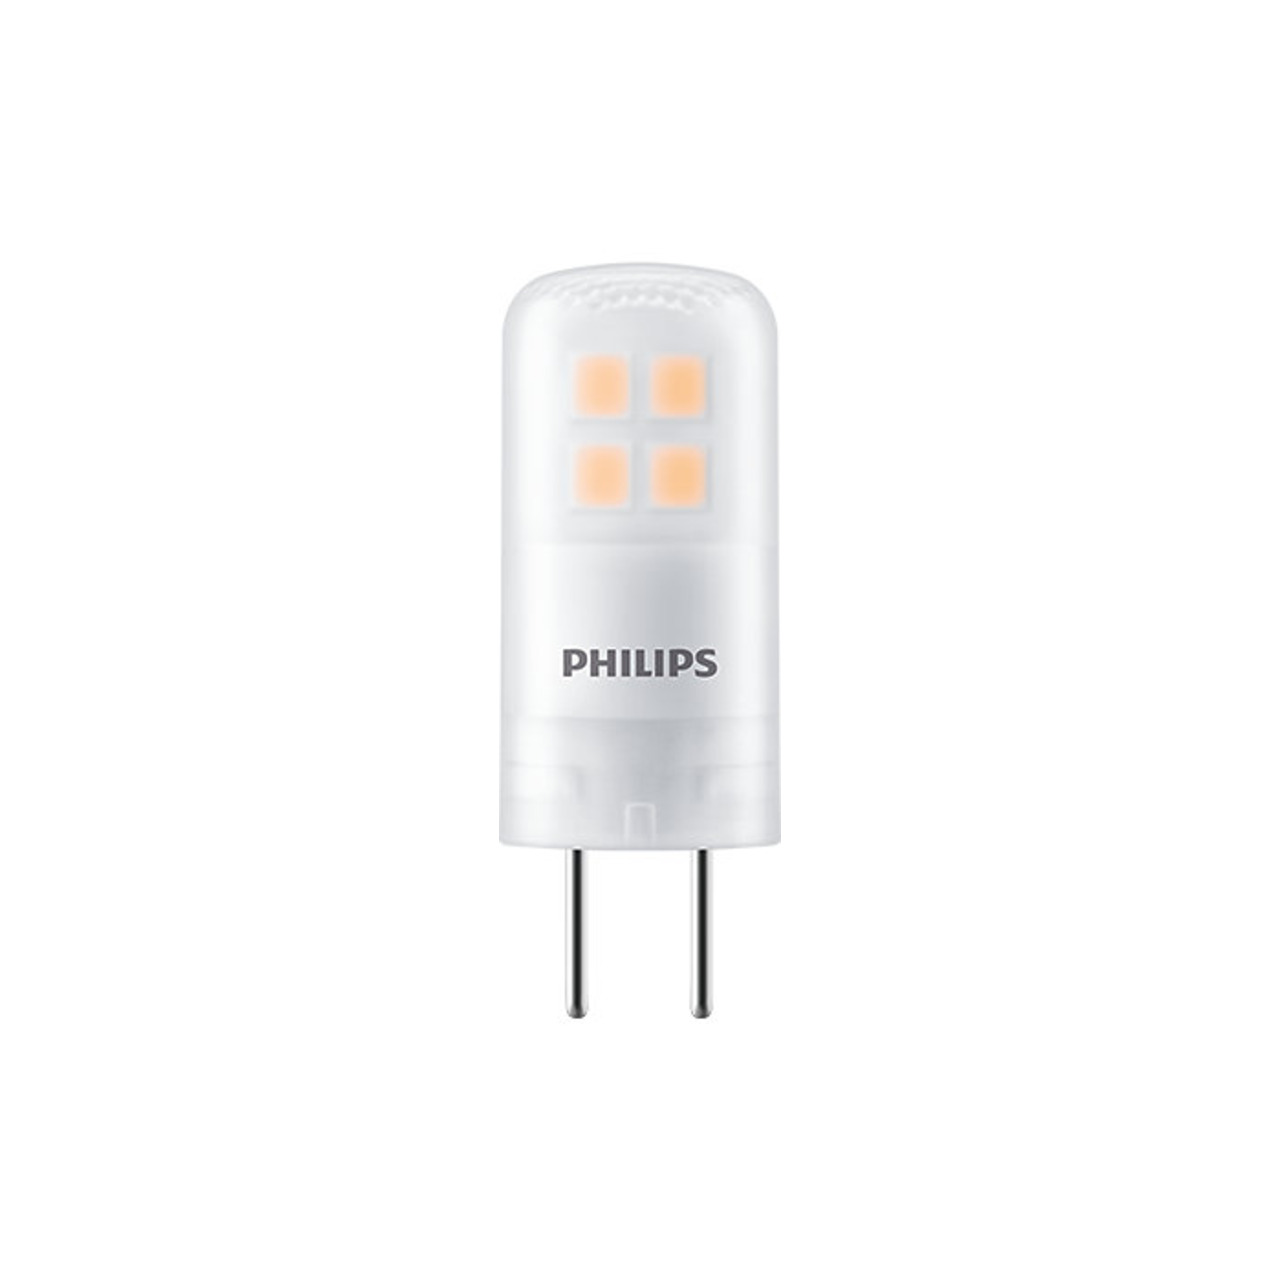 Philips 1-8-W-GY6-35-LED-Lampe CorePro LEDcapsule 205 lm- nicht dimmbar- warmweiss